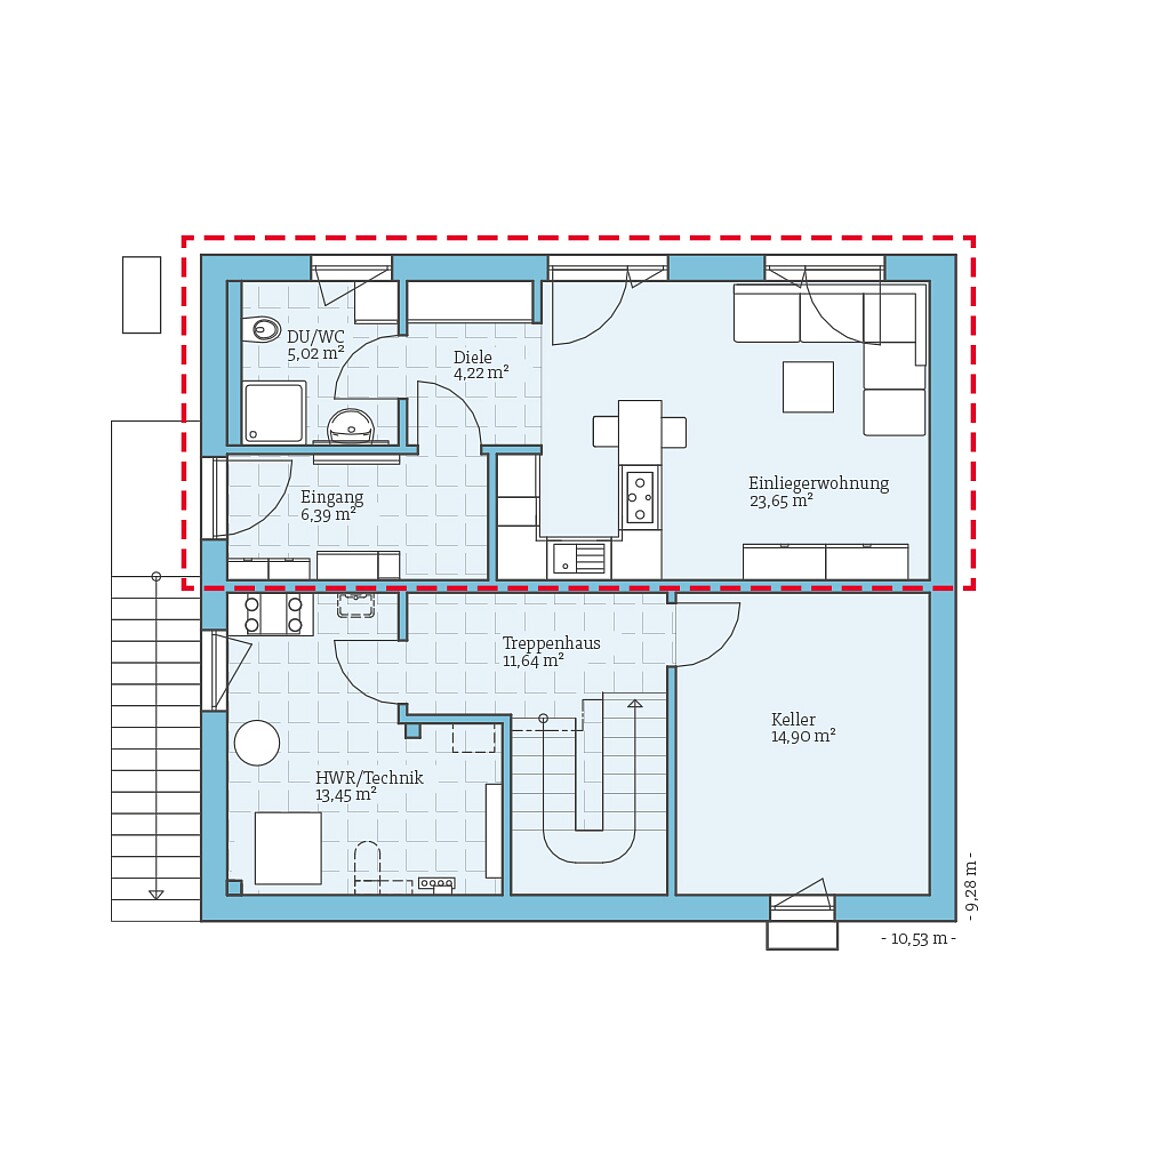 Prefabricated house Variant 25-166 with granny flat Variant 2: Basement floor plan